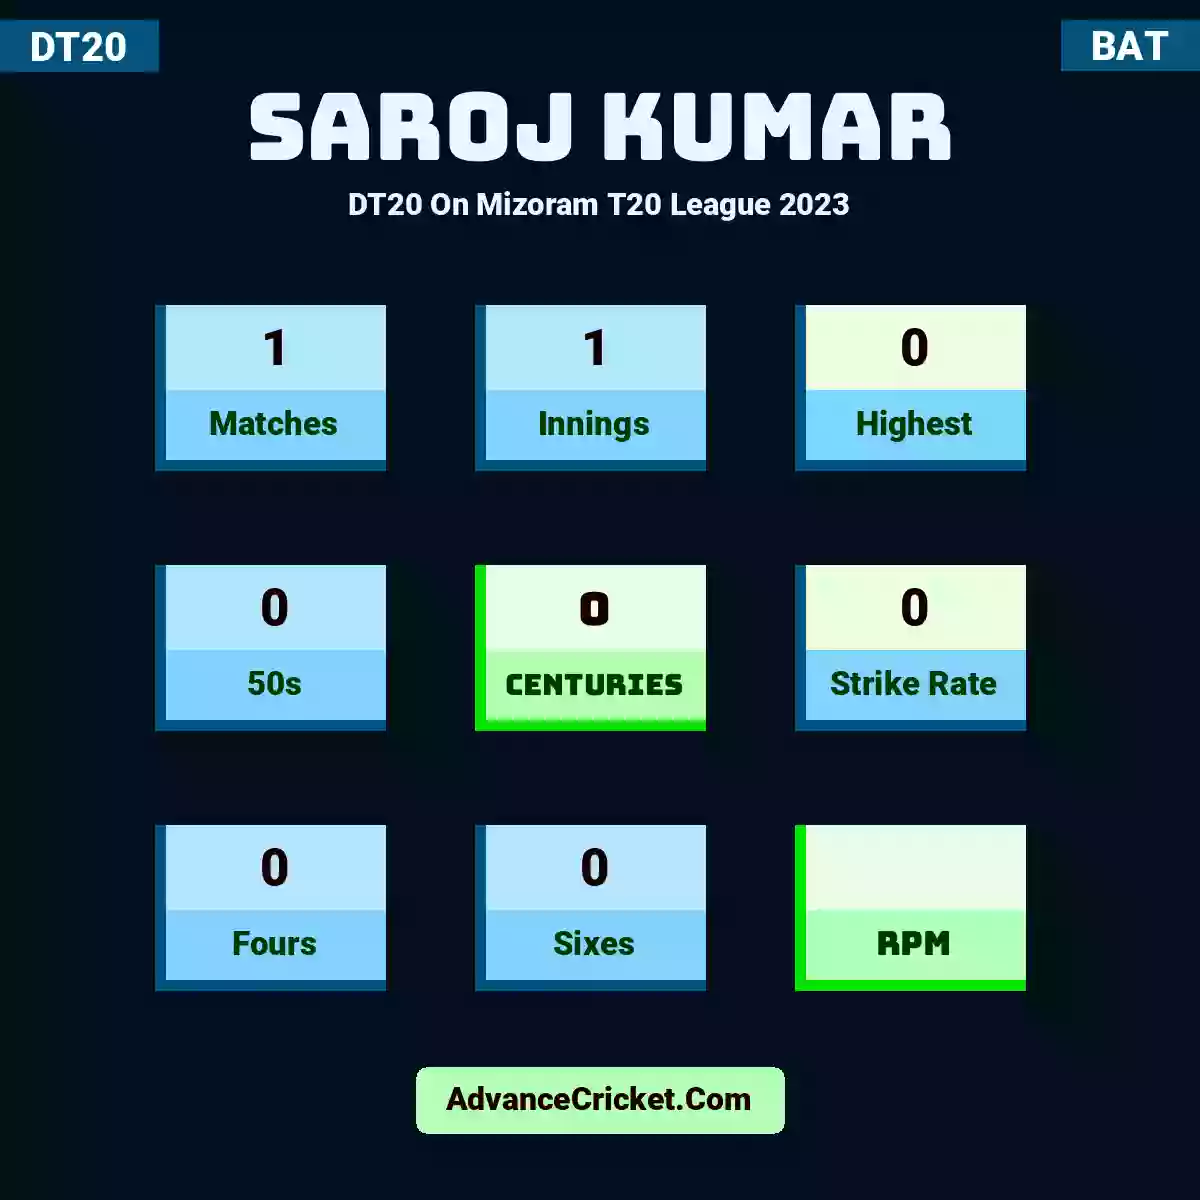 Saroj Kumar DT20  On Mizoram T20 League 2023, Saroj Kumar played 1 matches, scored 0 runs as highest, 0 half-centuries, and 0 centuries, with a strike rate of 0. S.Kumar hit 0 fours and 0 sixes.